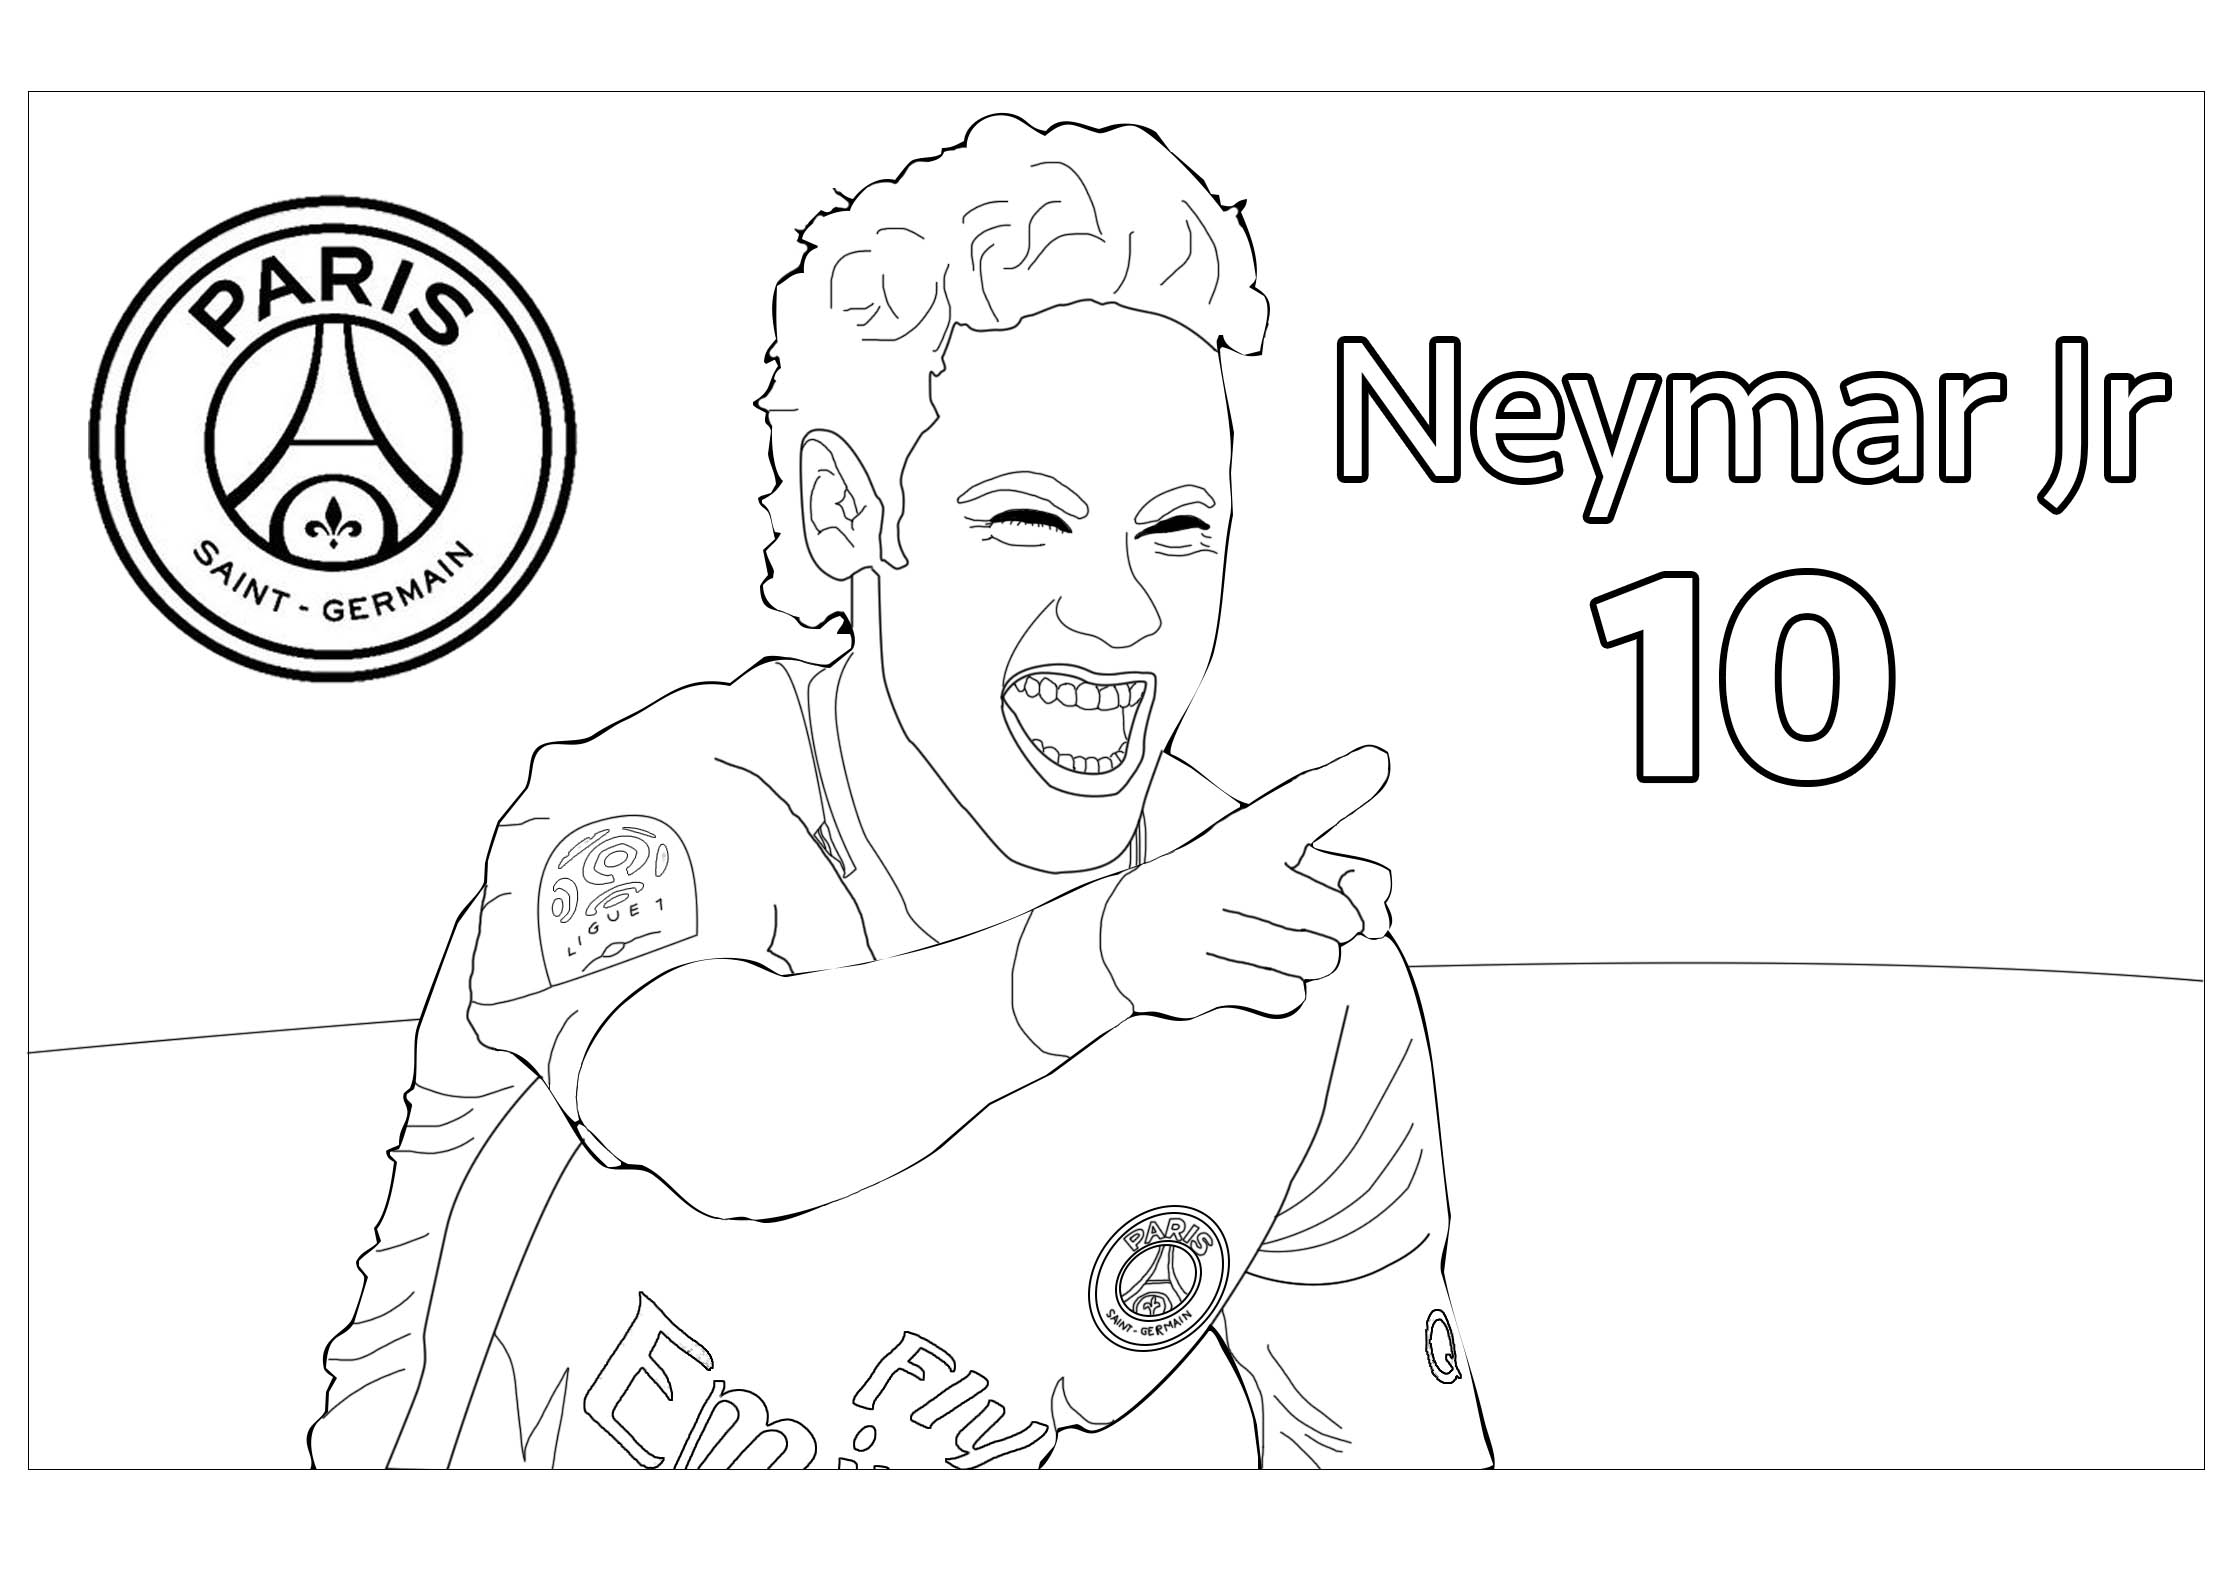 Neymar Jr (Neymar da Silva Santos Júnior), the great Football Player - With PSG Logo